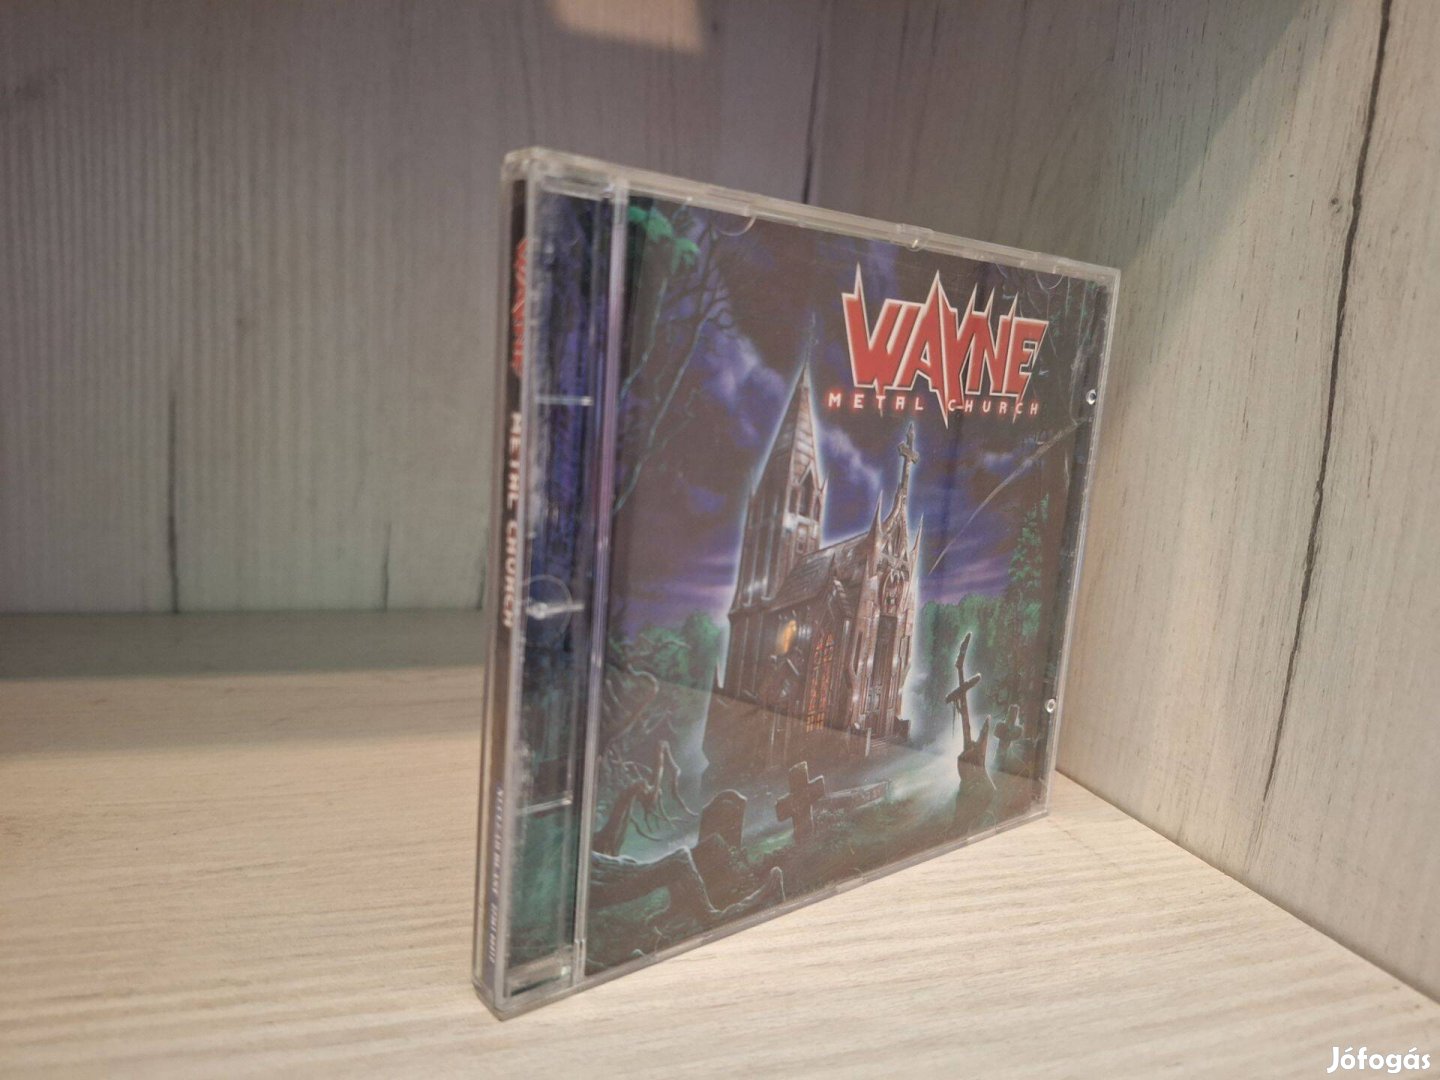 Wayne - Metal Church CD